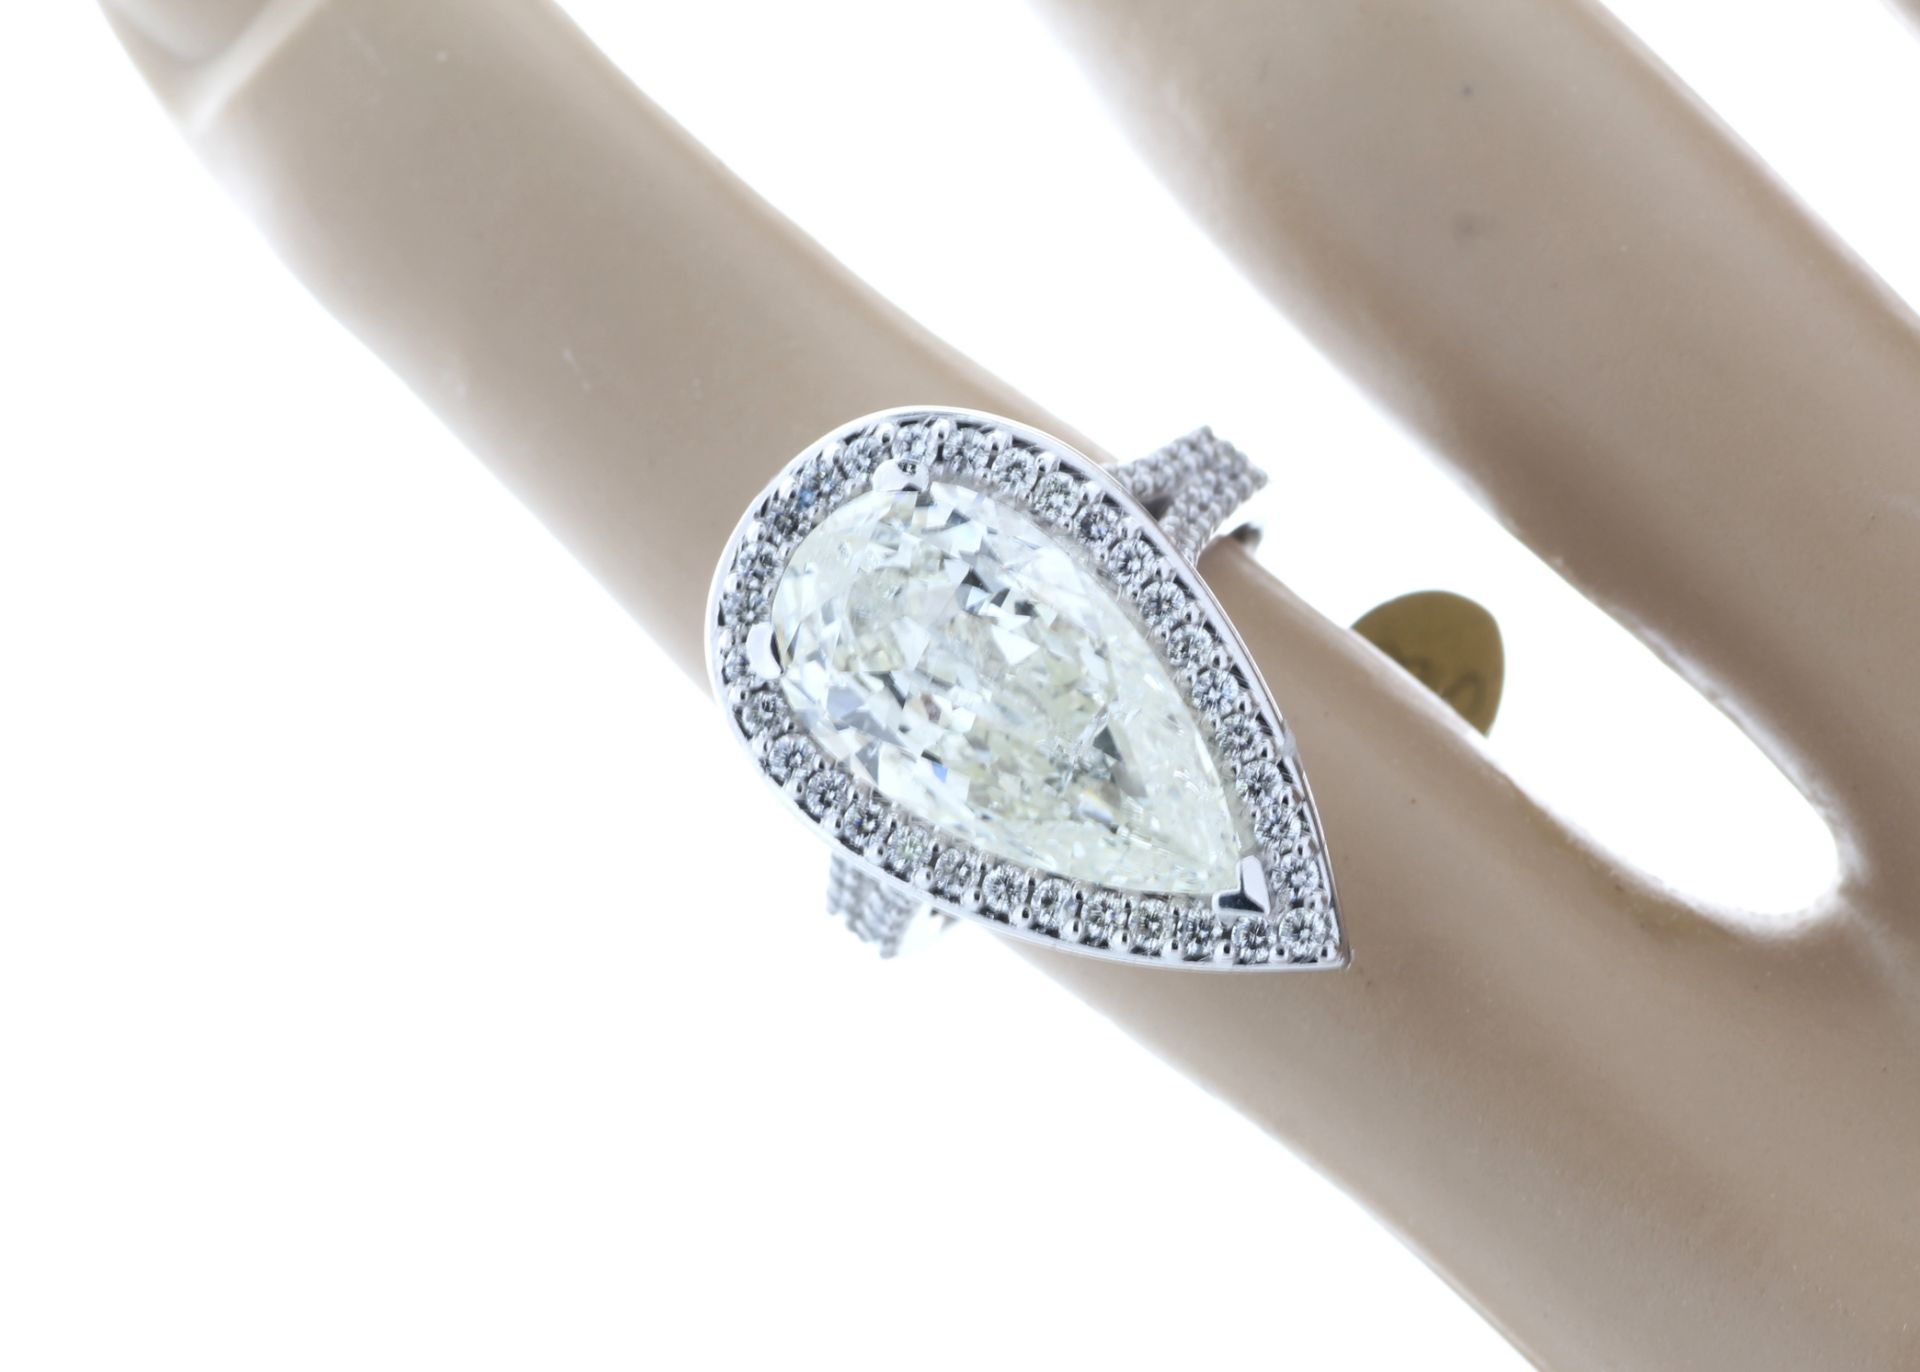 7 Carat Pear Shape Halo Diamond Ring - Image 3 of 3